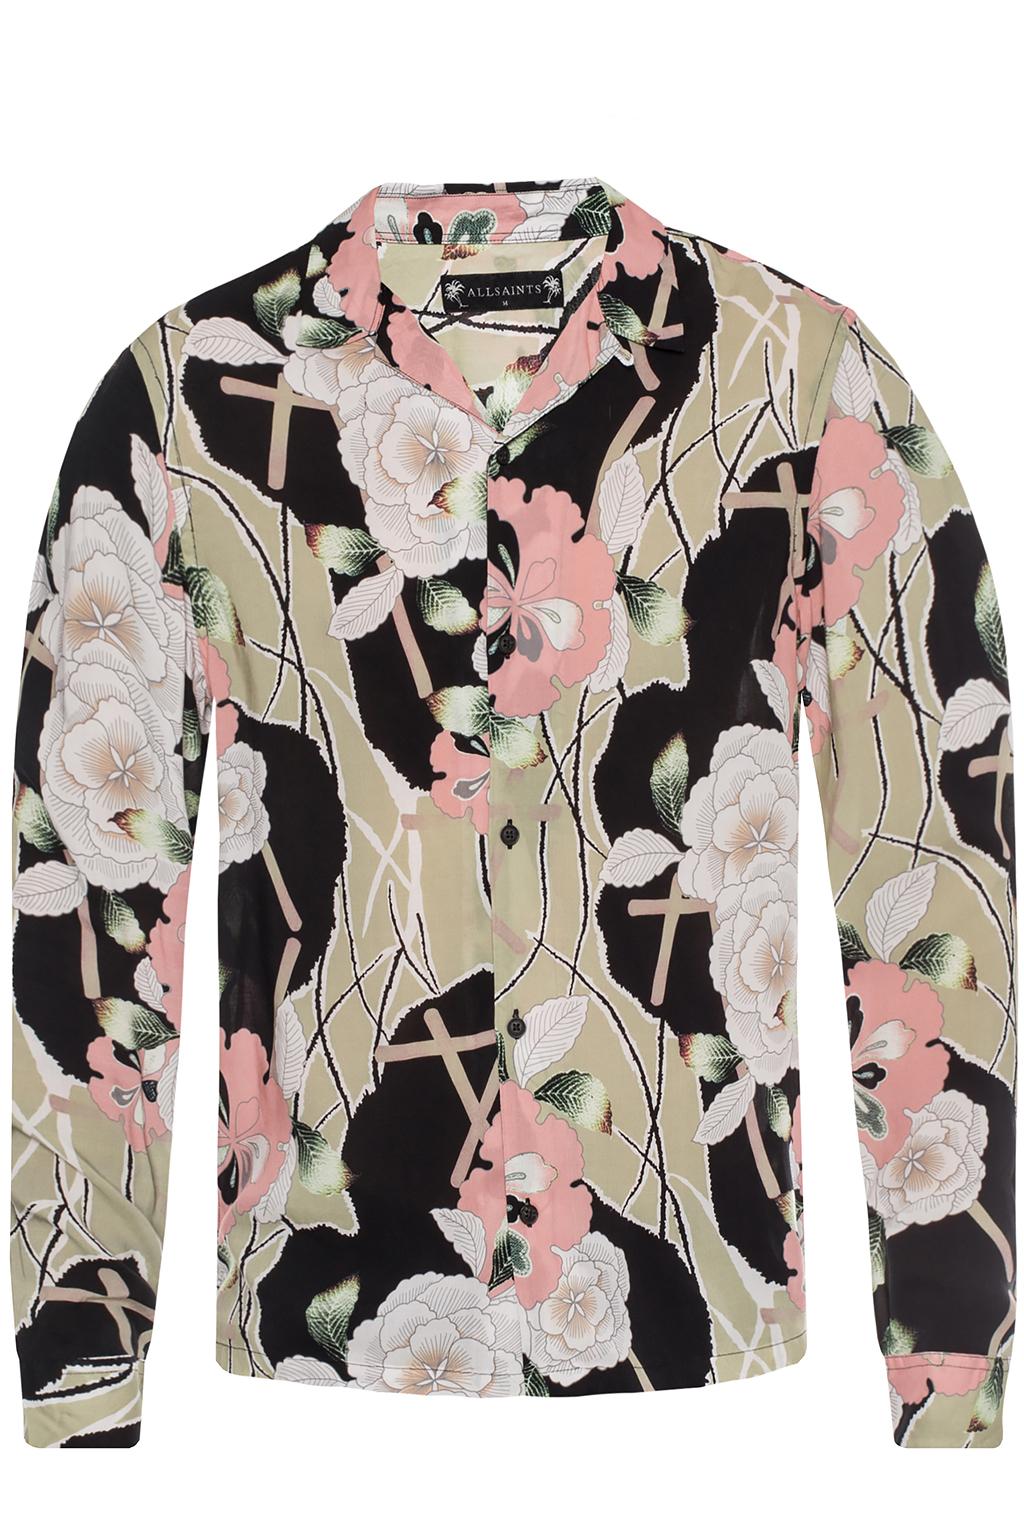 AllSaints 'Fuyugi' floral-printed shirt | Men's Clothing | Vitkac